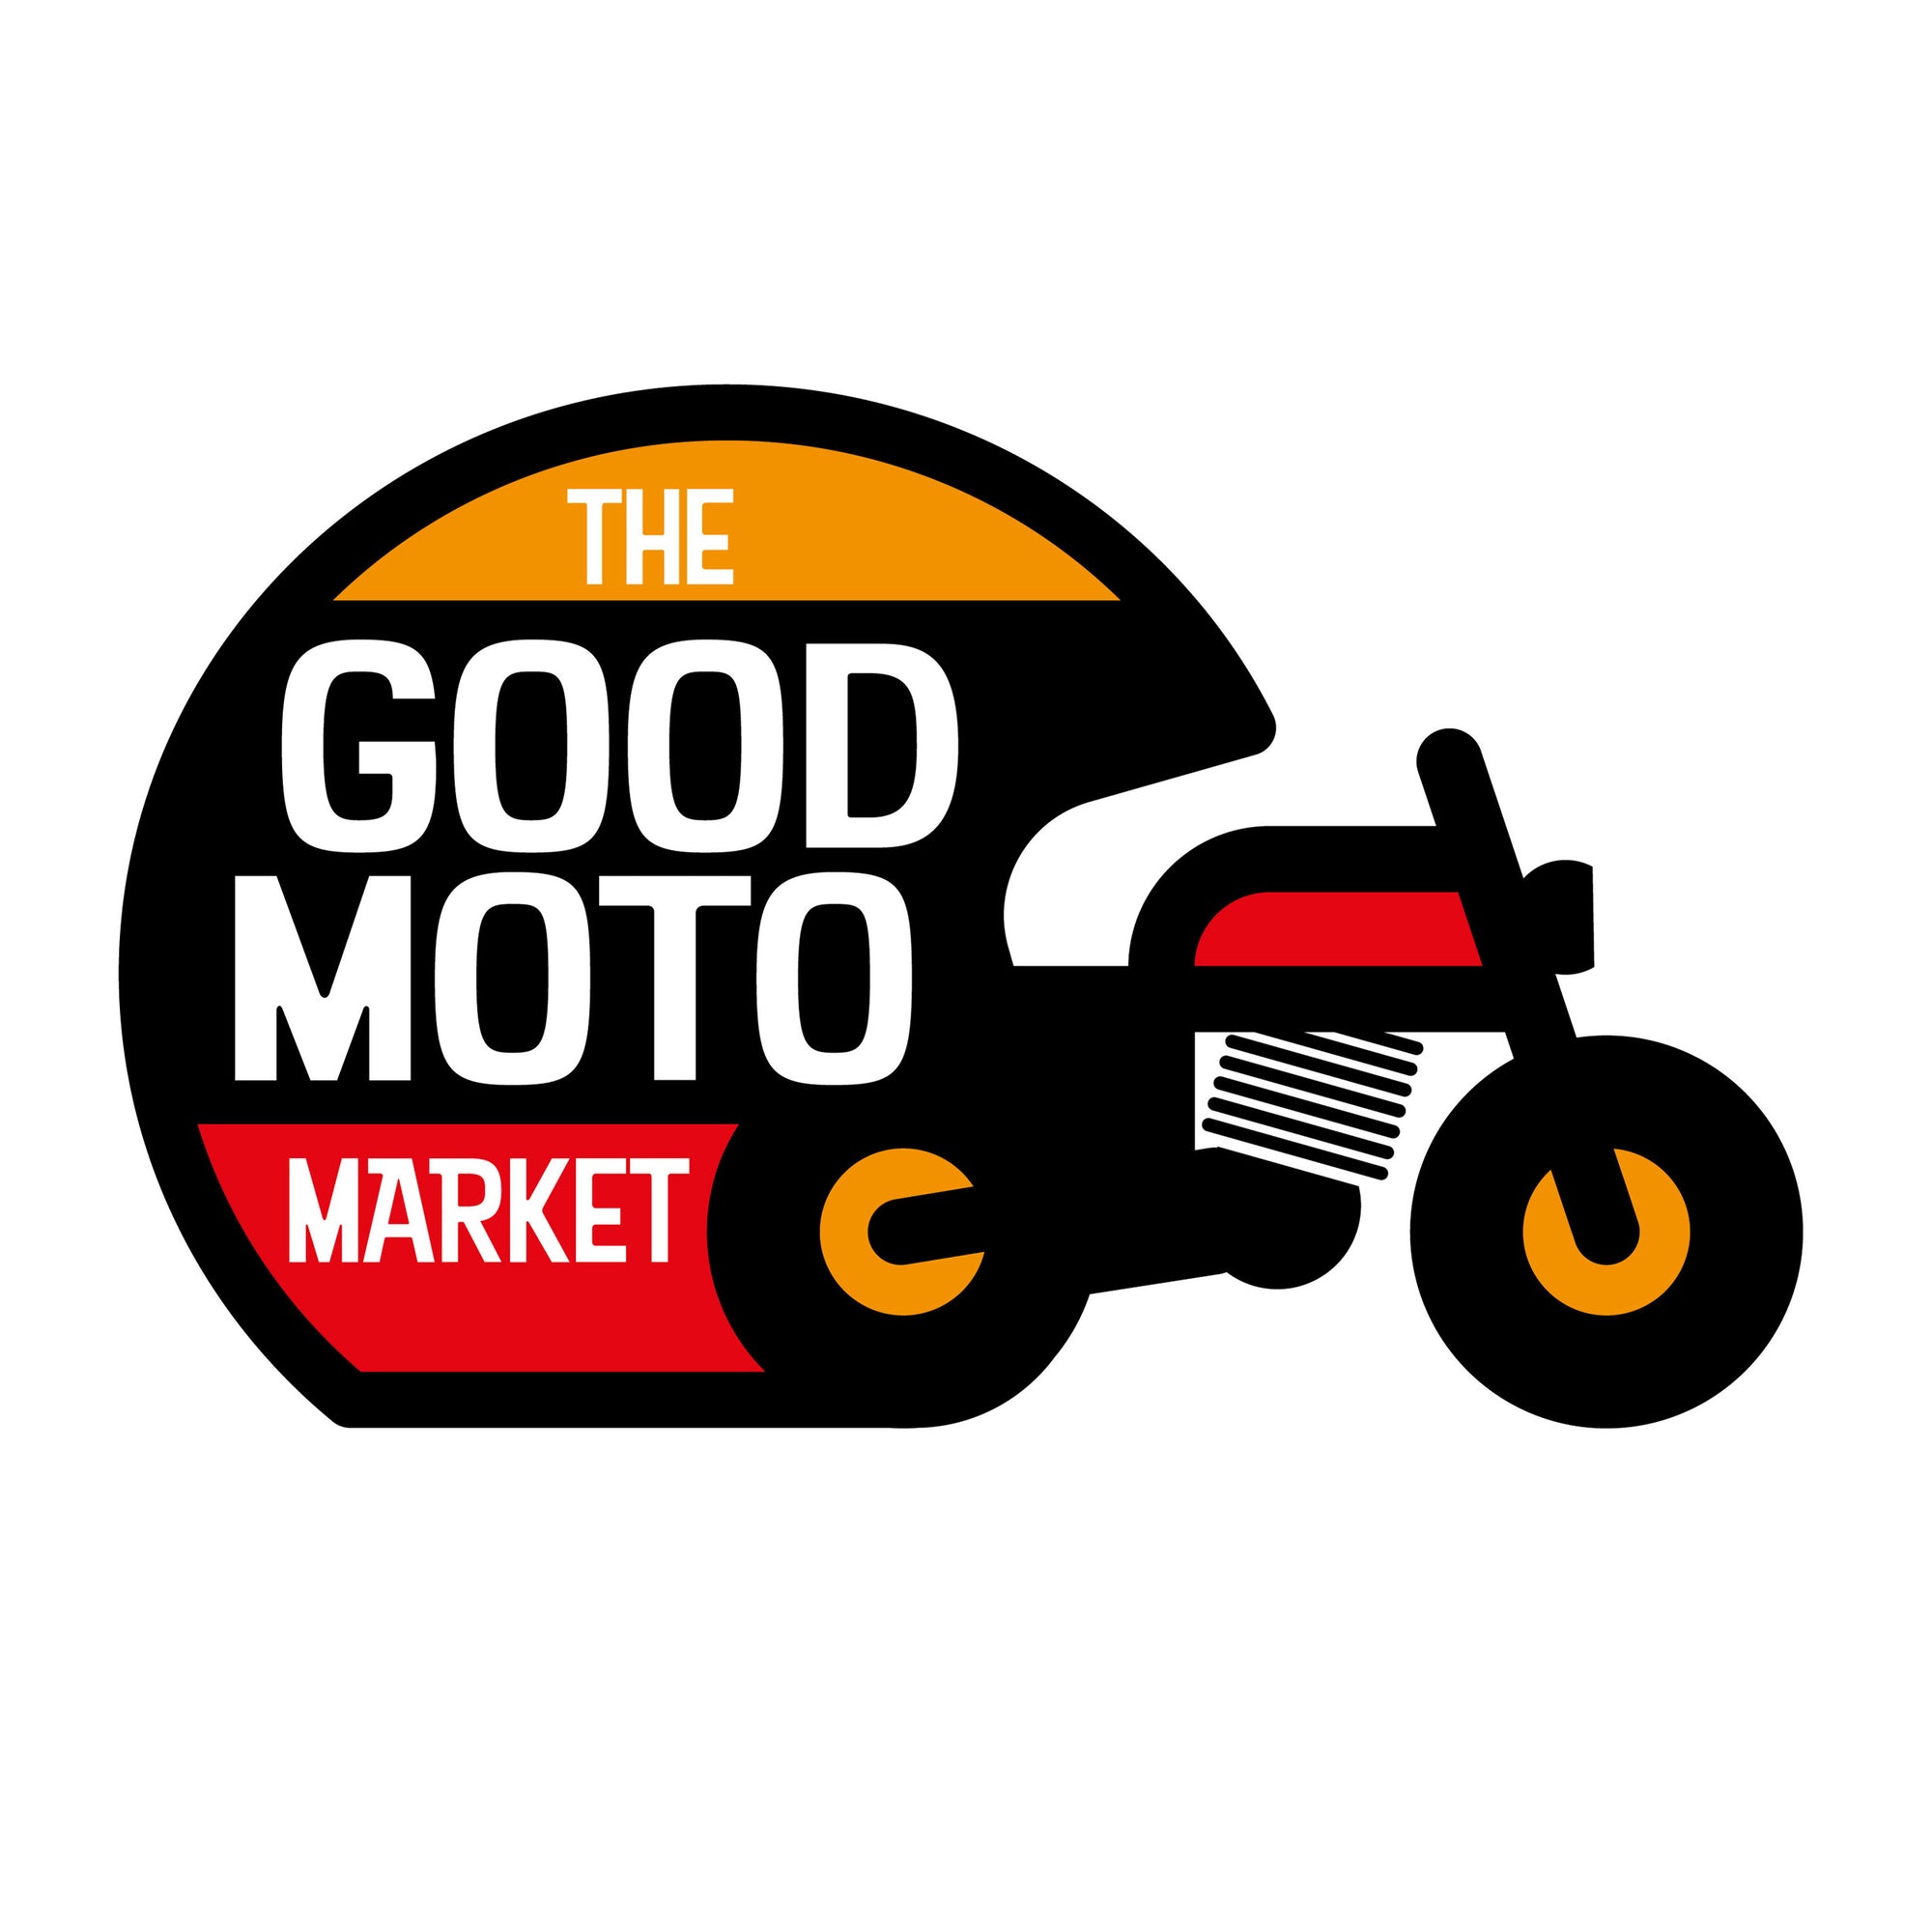 THE GOOD MOTO MARKET